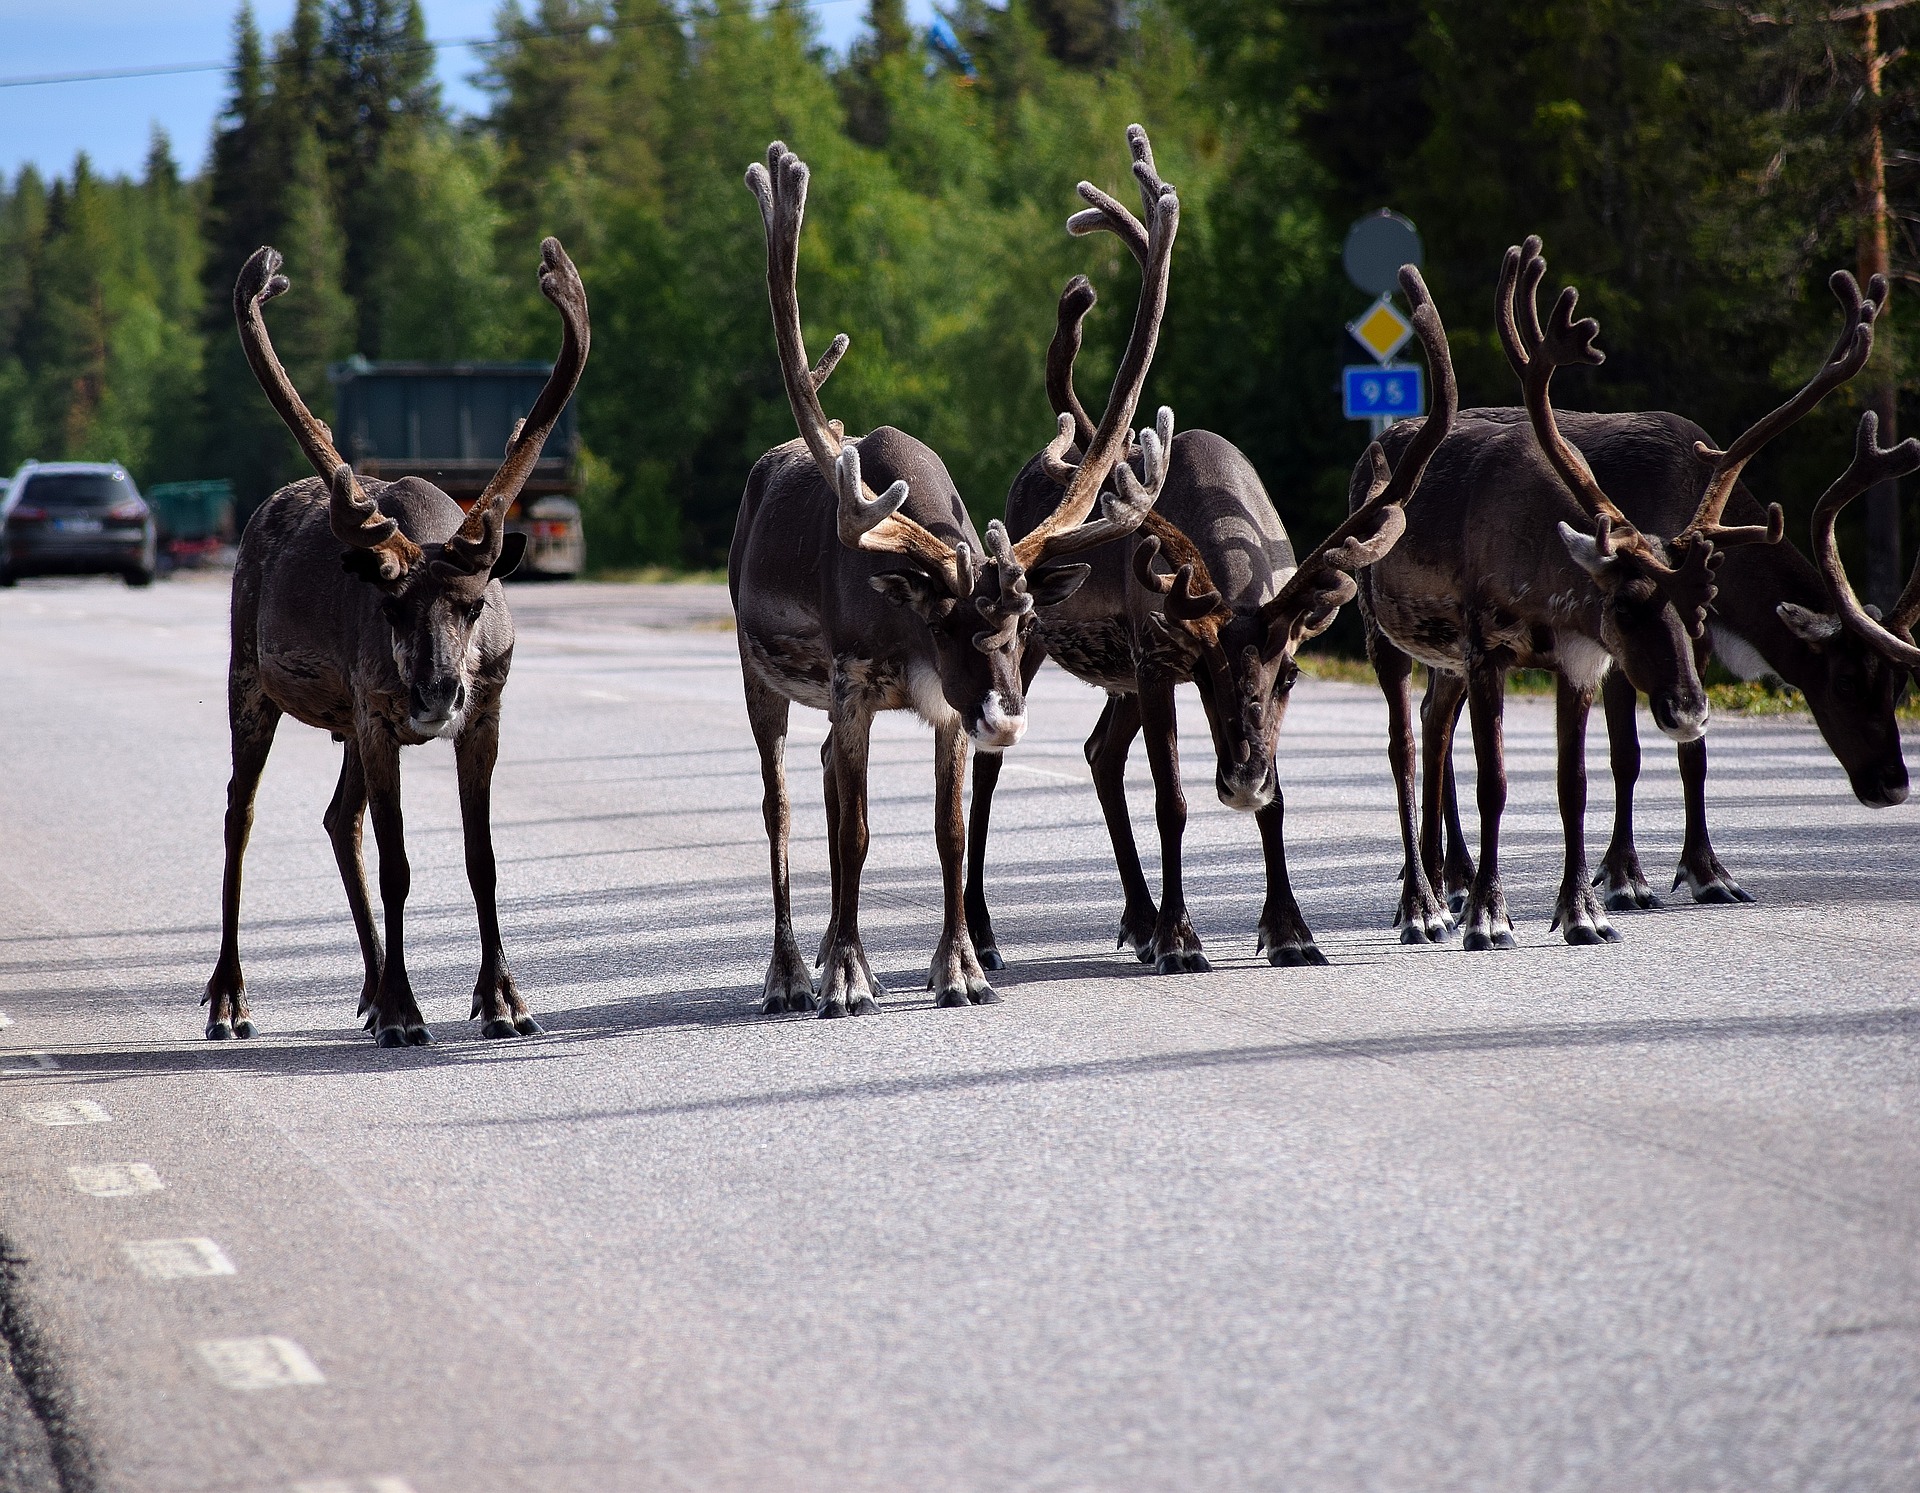 Reindeer during summer in Lapland